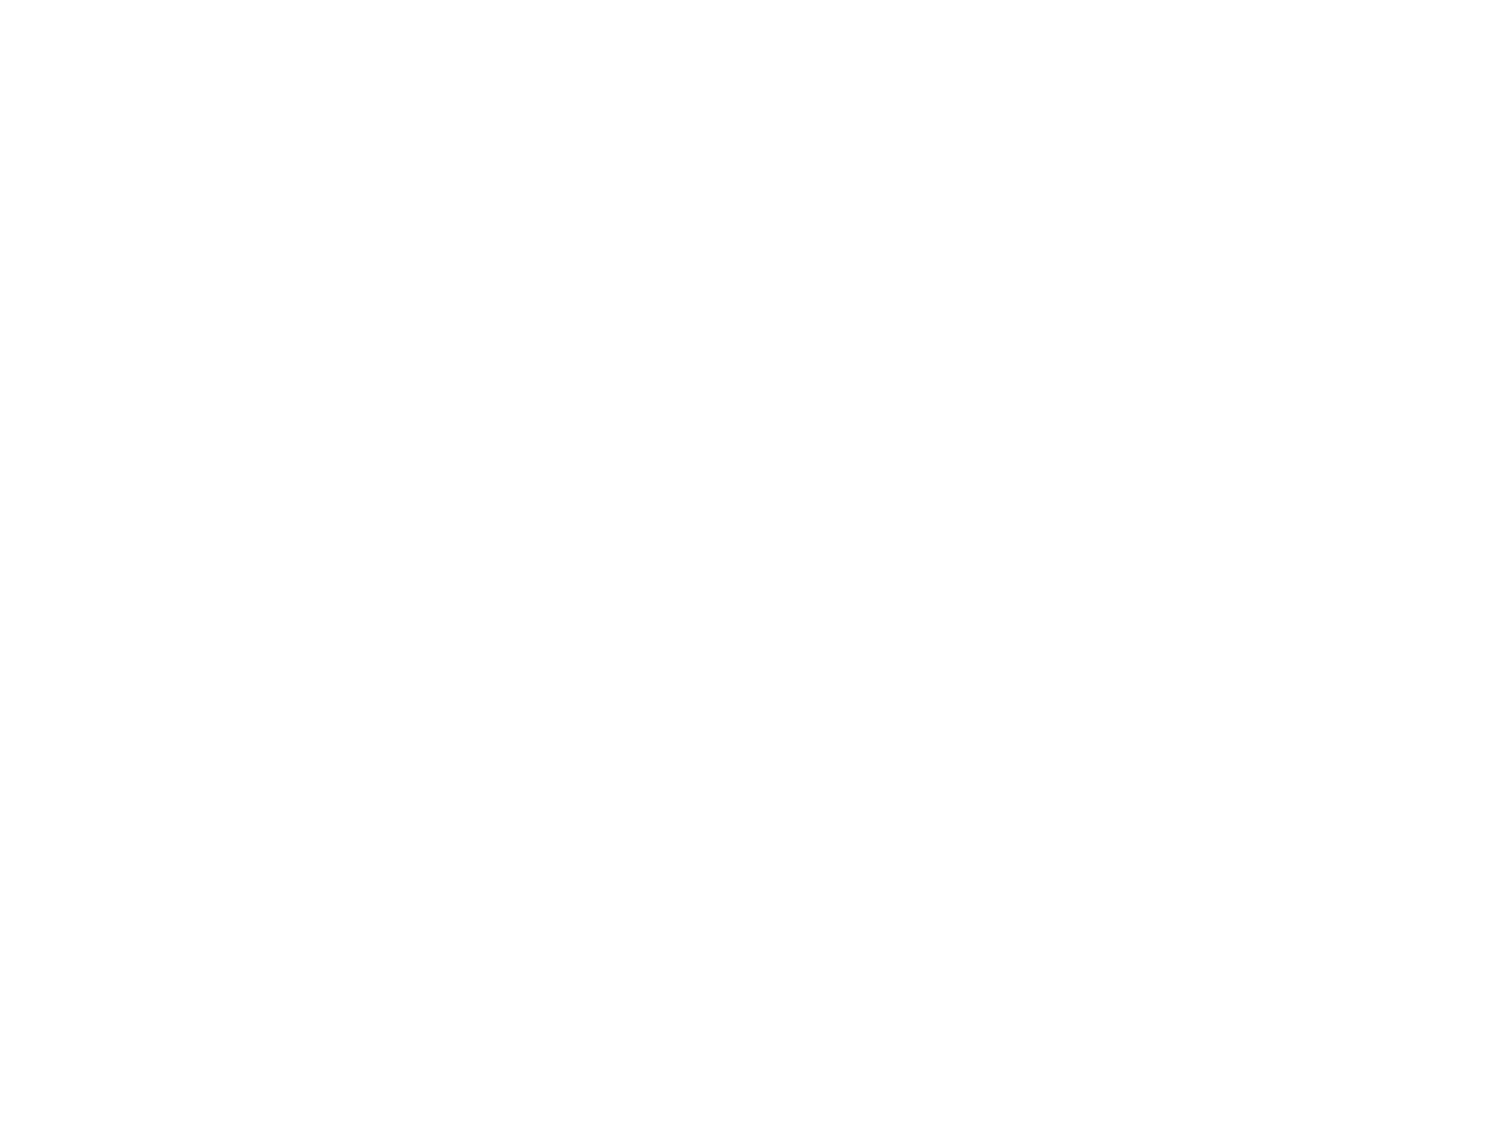 Jake Hertzog